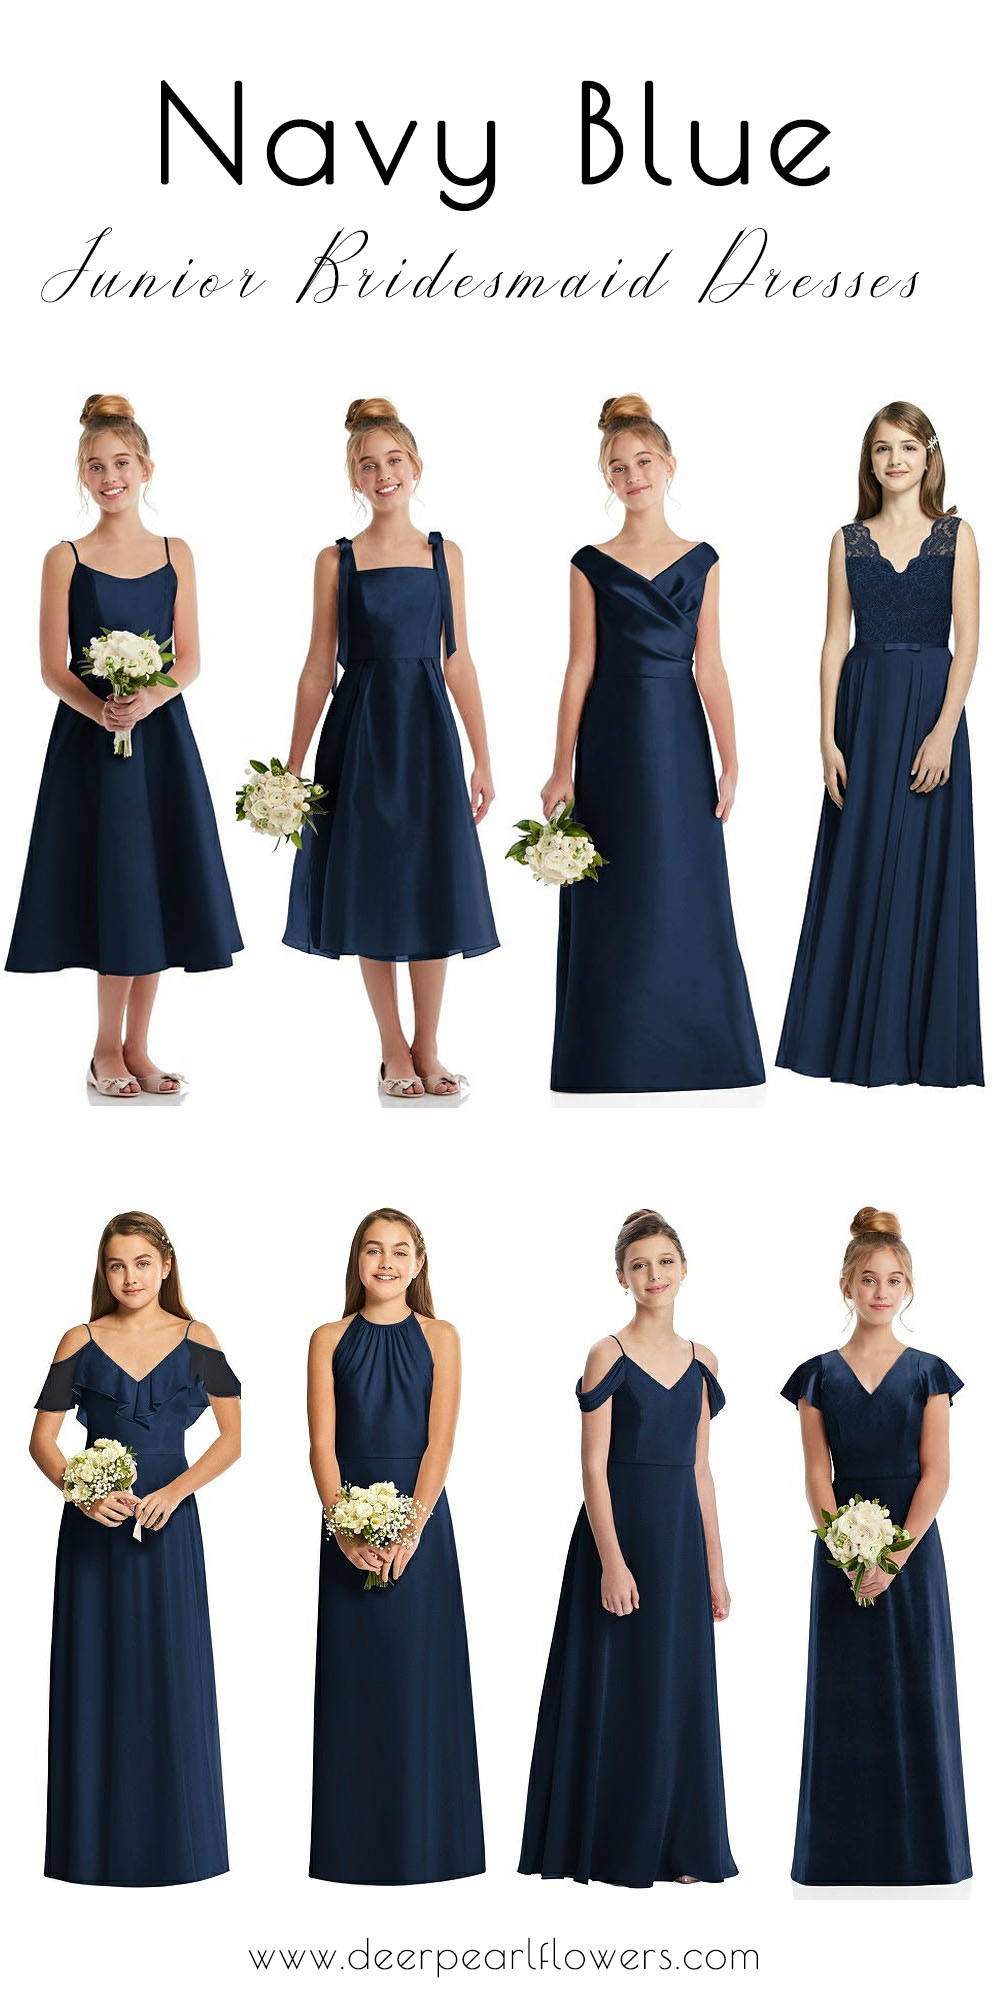 navy blue junior bridesmaid dresses